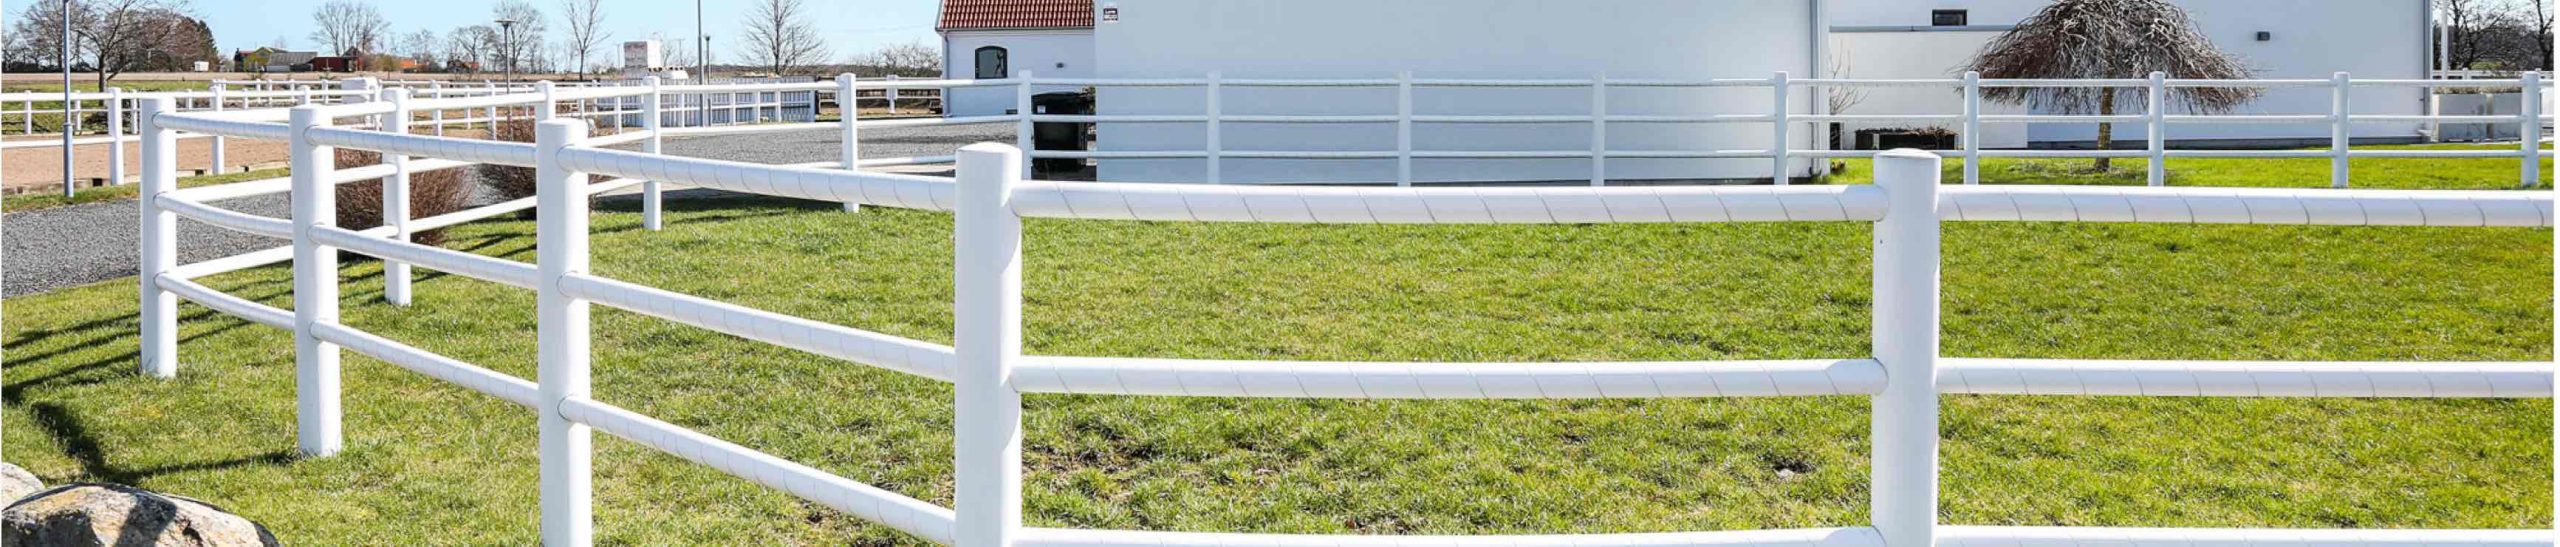 recinzioni equisafe shop harrison horse care